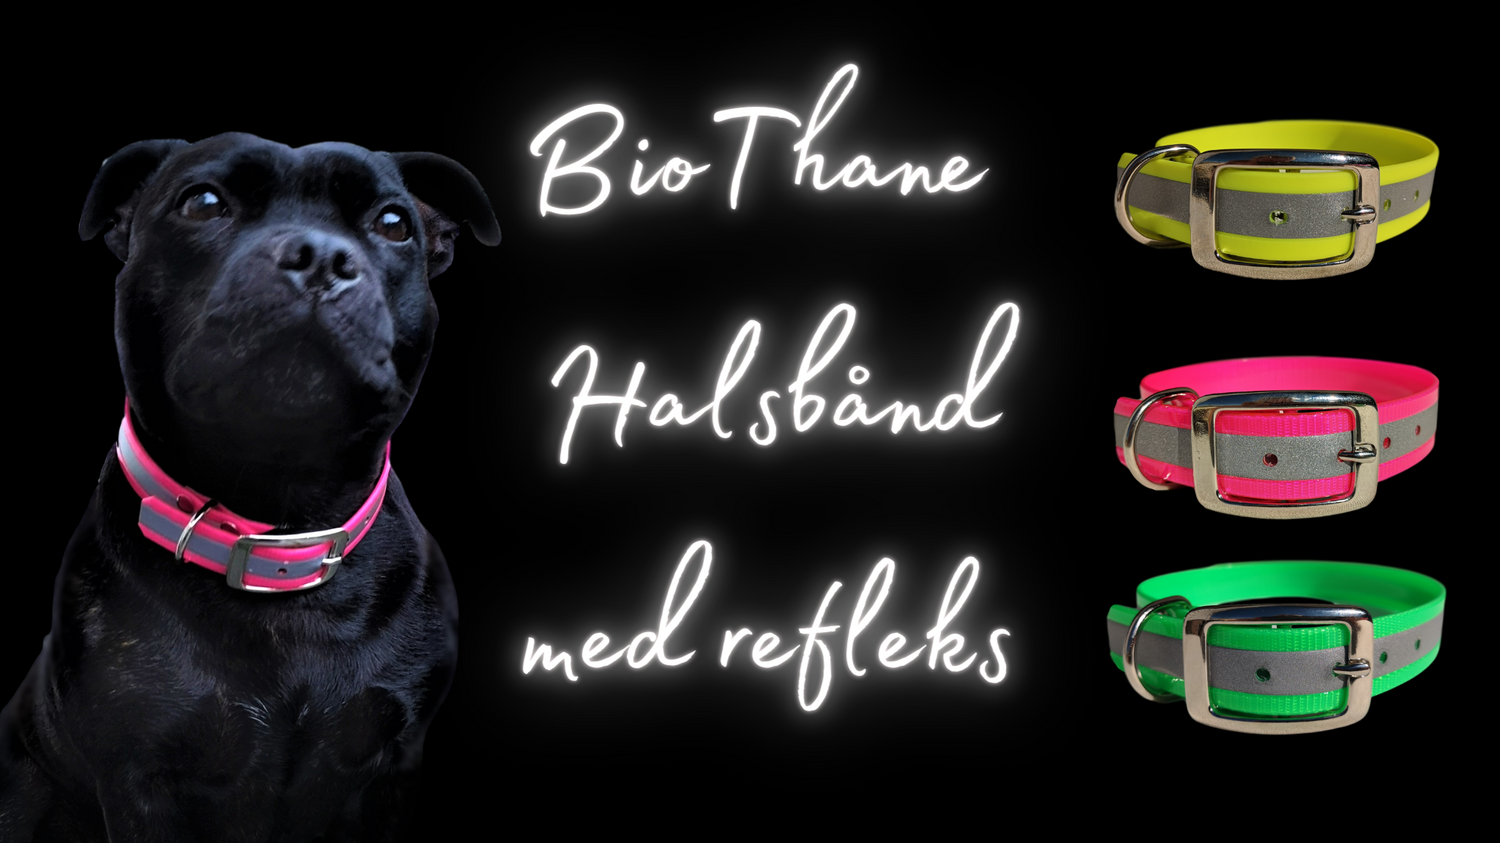 BioThane halsbånd med refleks til hund